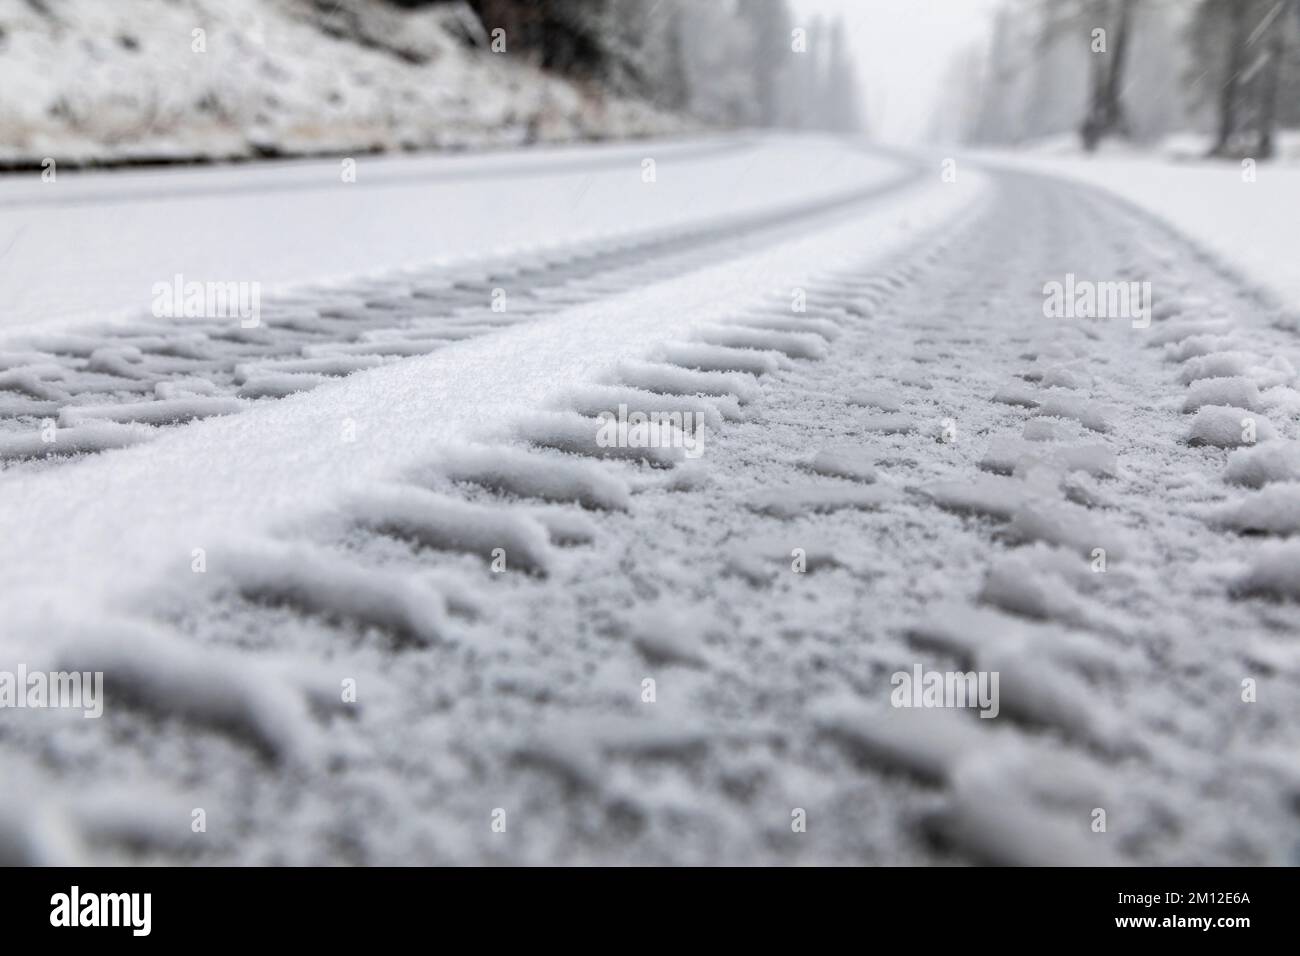 Italy, Veneto, Belluno, Dolomites. Tread marks of a heavy vehicle in the fresh snow along a mountain road Stock Photo